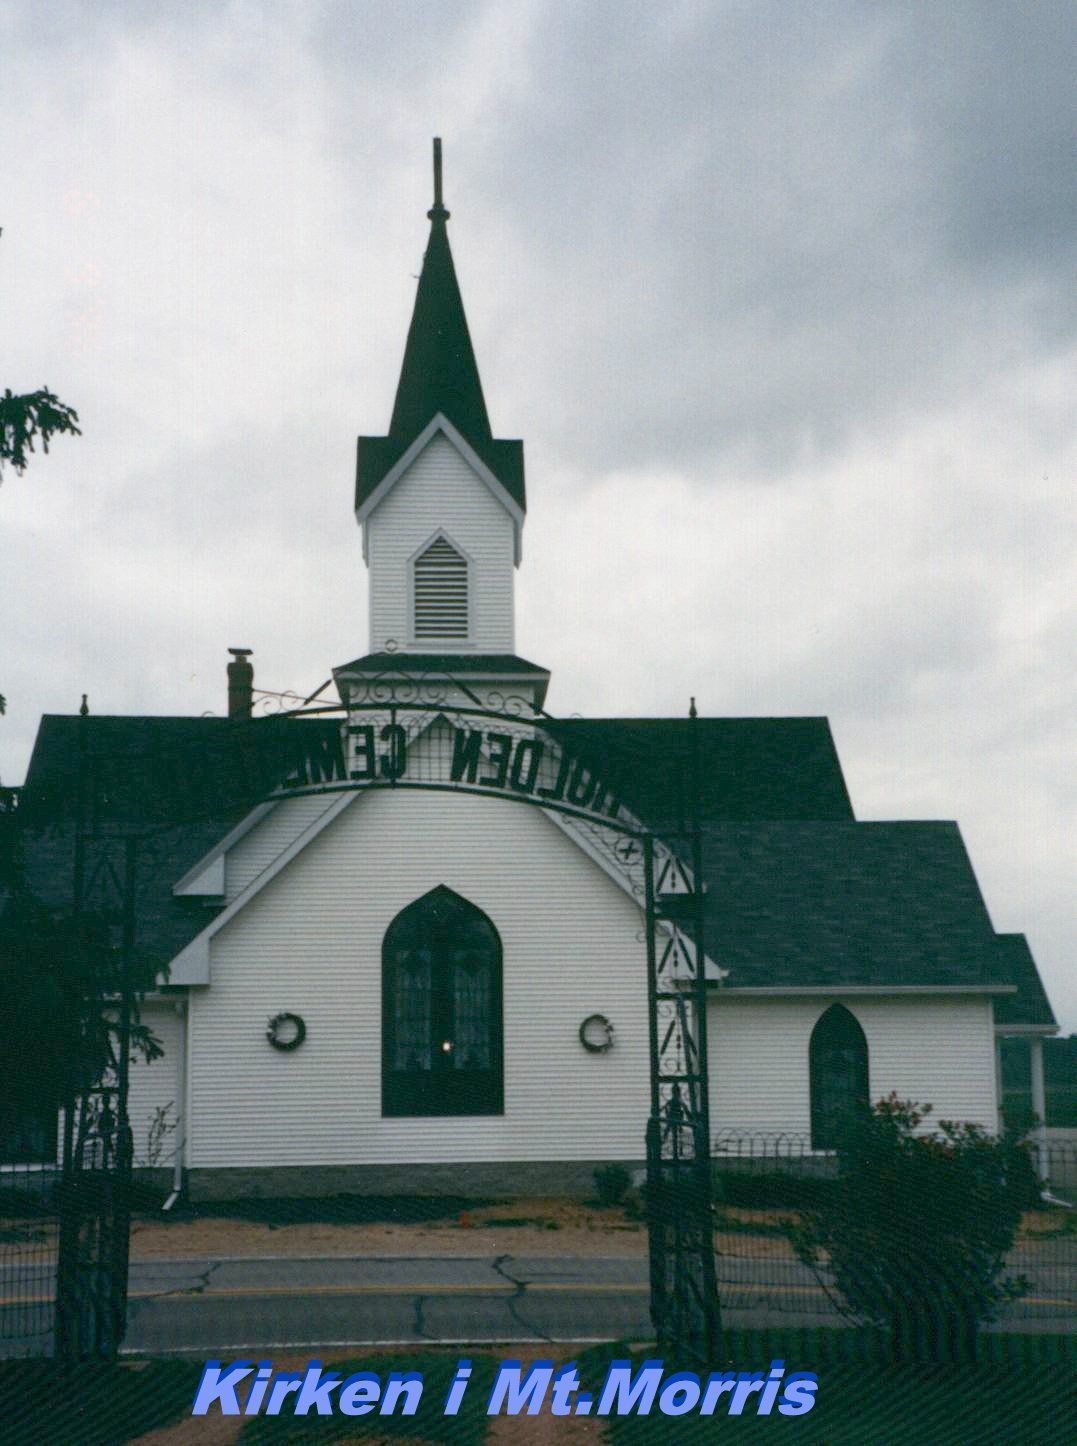 The Church/Kirken i(n) Mount Morris.